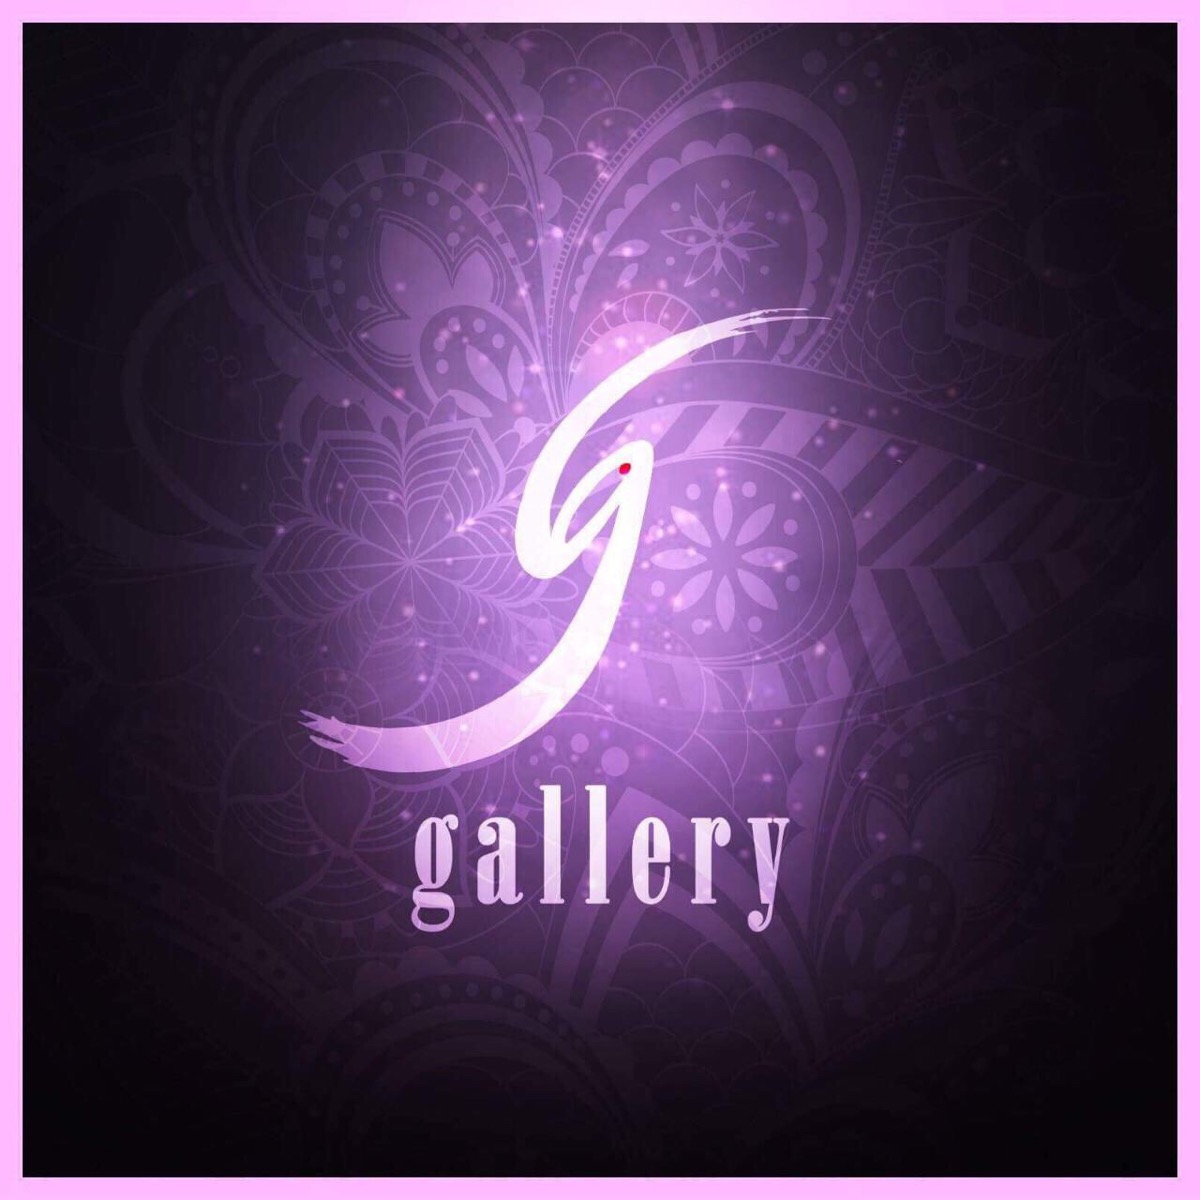 69 Gallery (restaurant & lounge) sắp khai trương